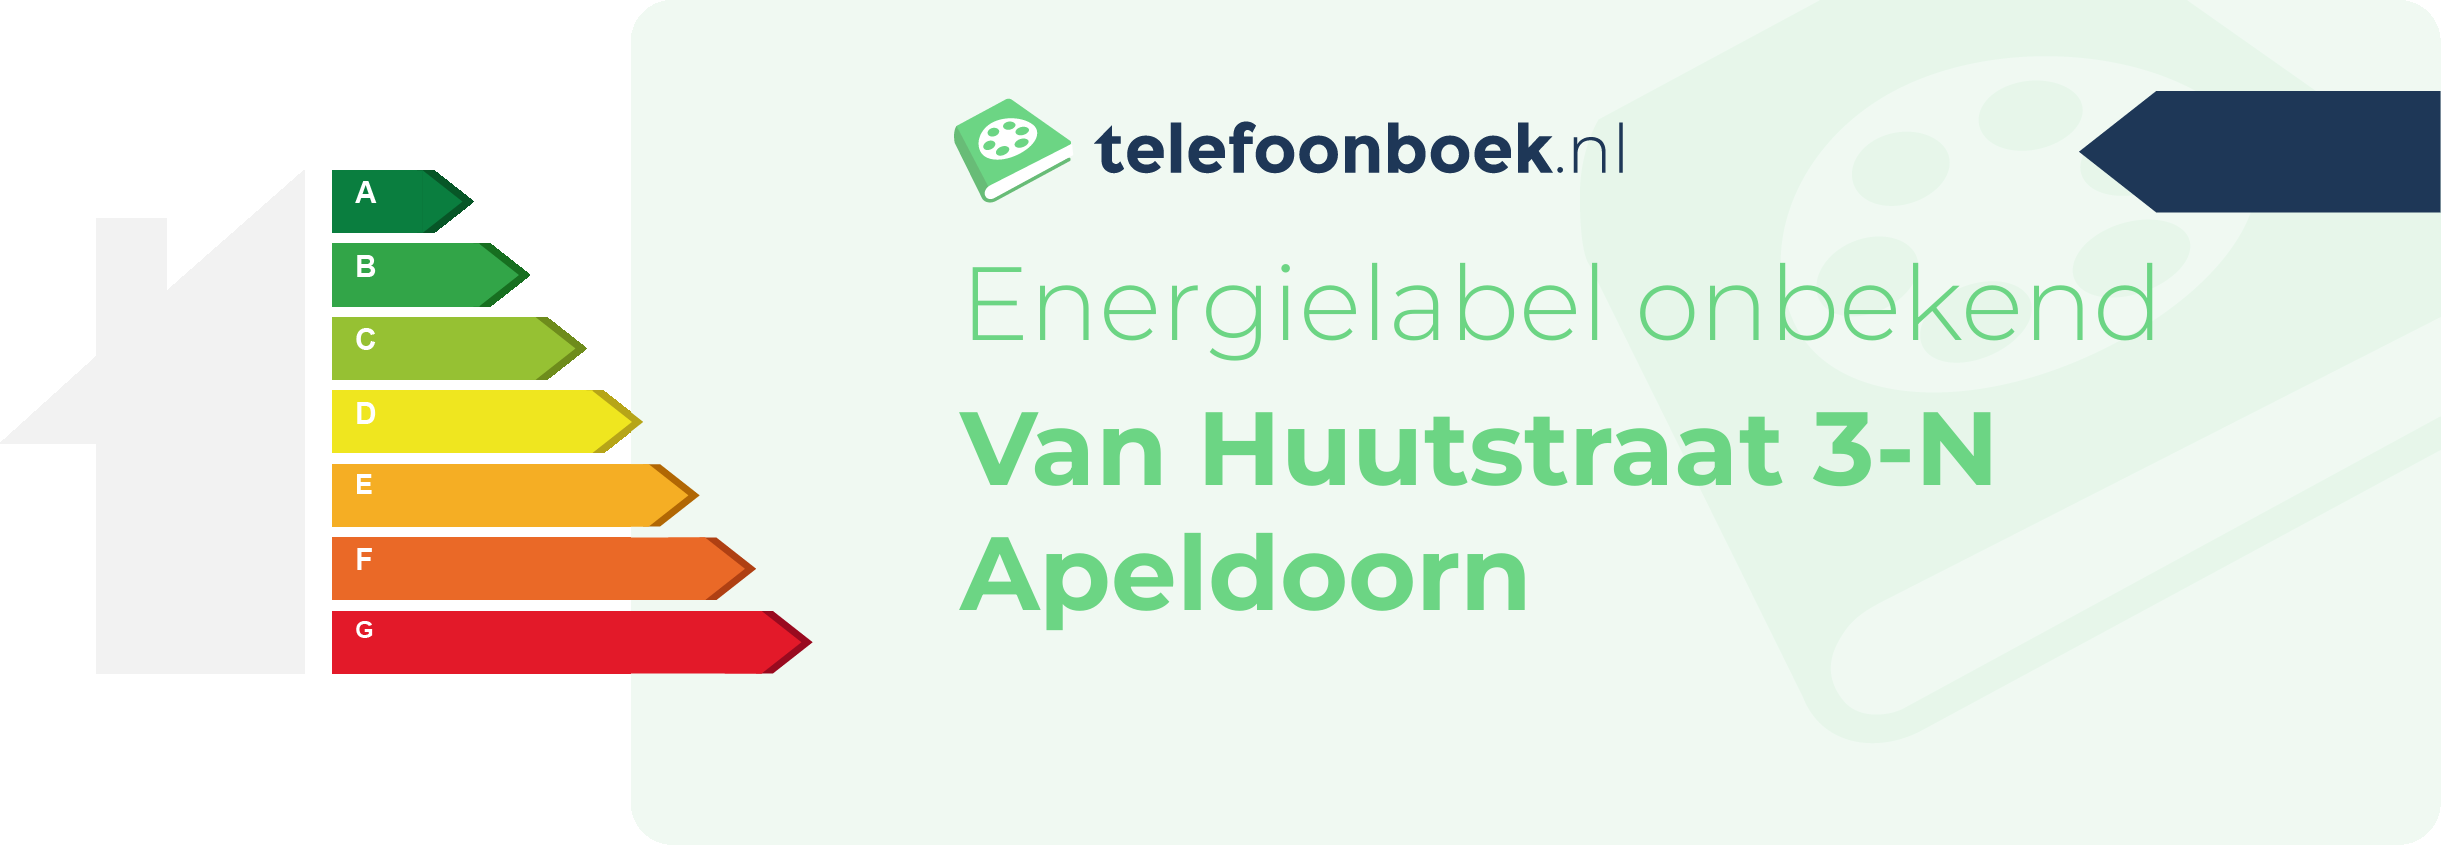 Energielabel Van Huutstraat 3-N Apeldoorn